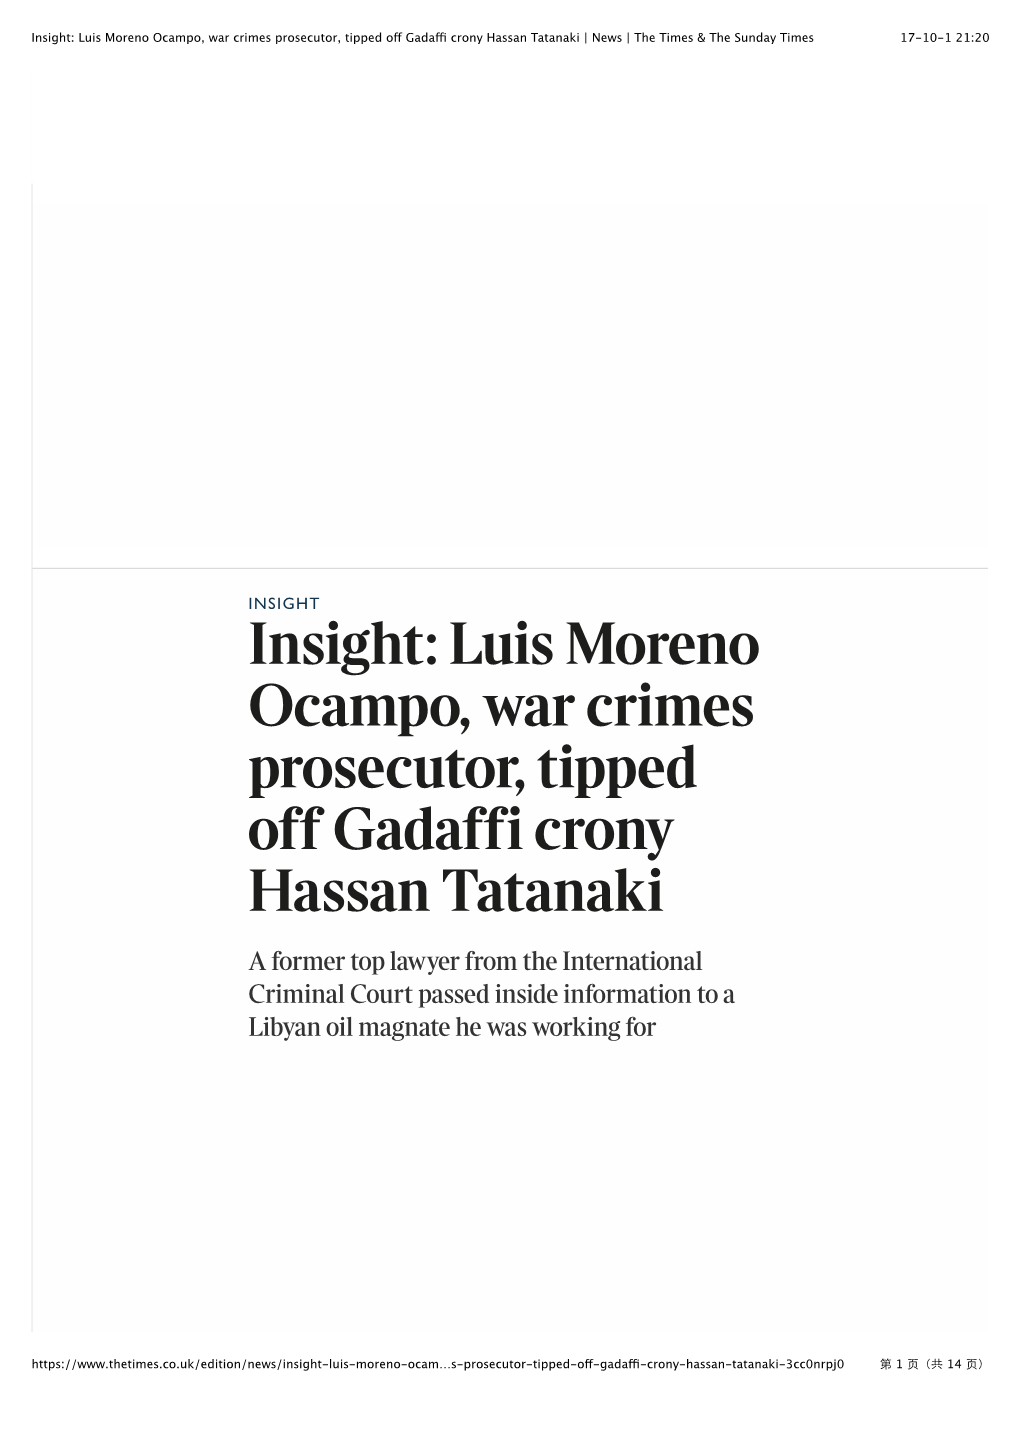 Luis Moreno Ocampo, War Crimes Prosecutor, Tipped Off Gadaffi Crony